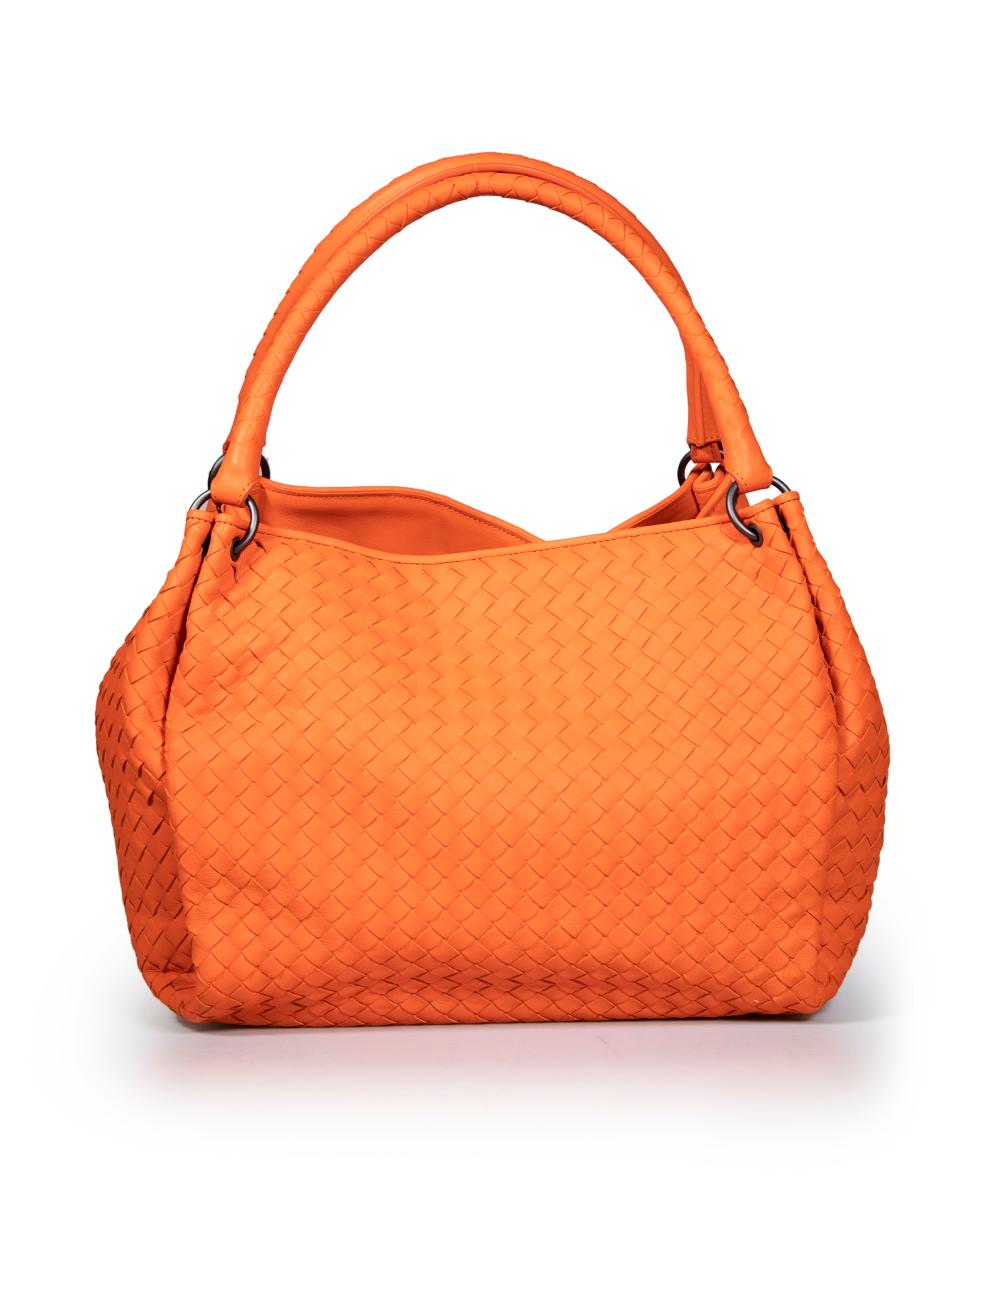 Bottega Veneta Orange Leather Intrecciato Parachute Bag In Good Condition In London, GB